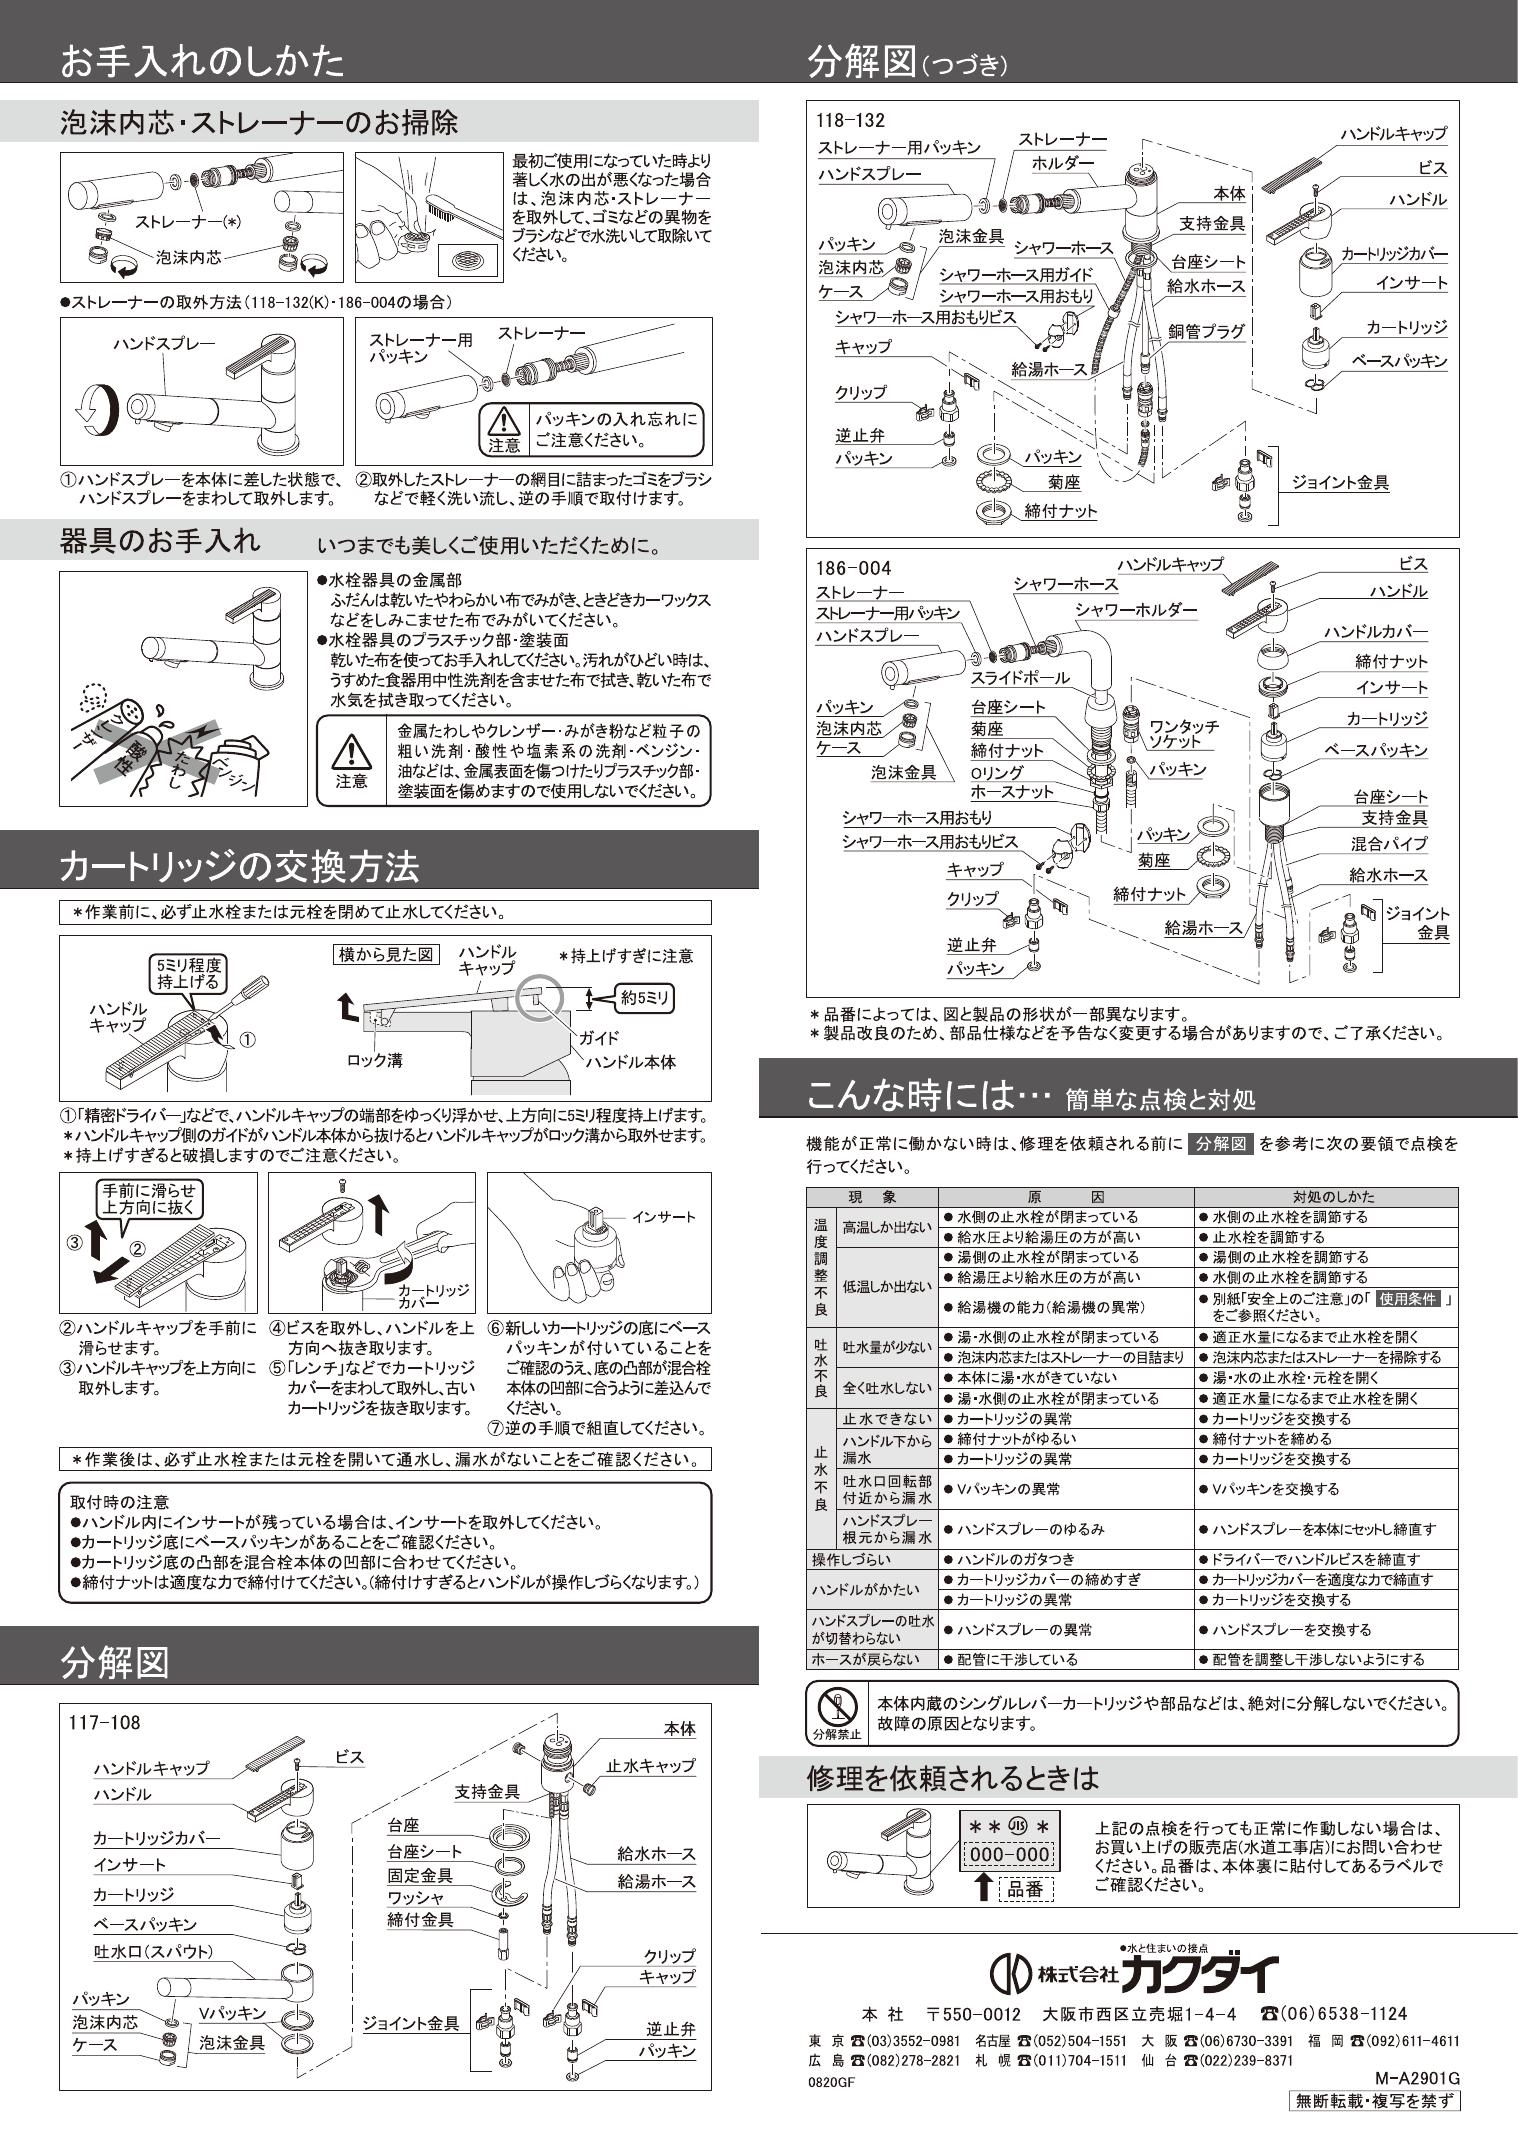 KAKUDAI カクダイ  シングル引出混合栓 マットブラック 184-002K-D - 4